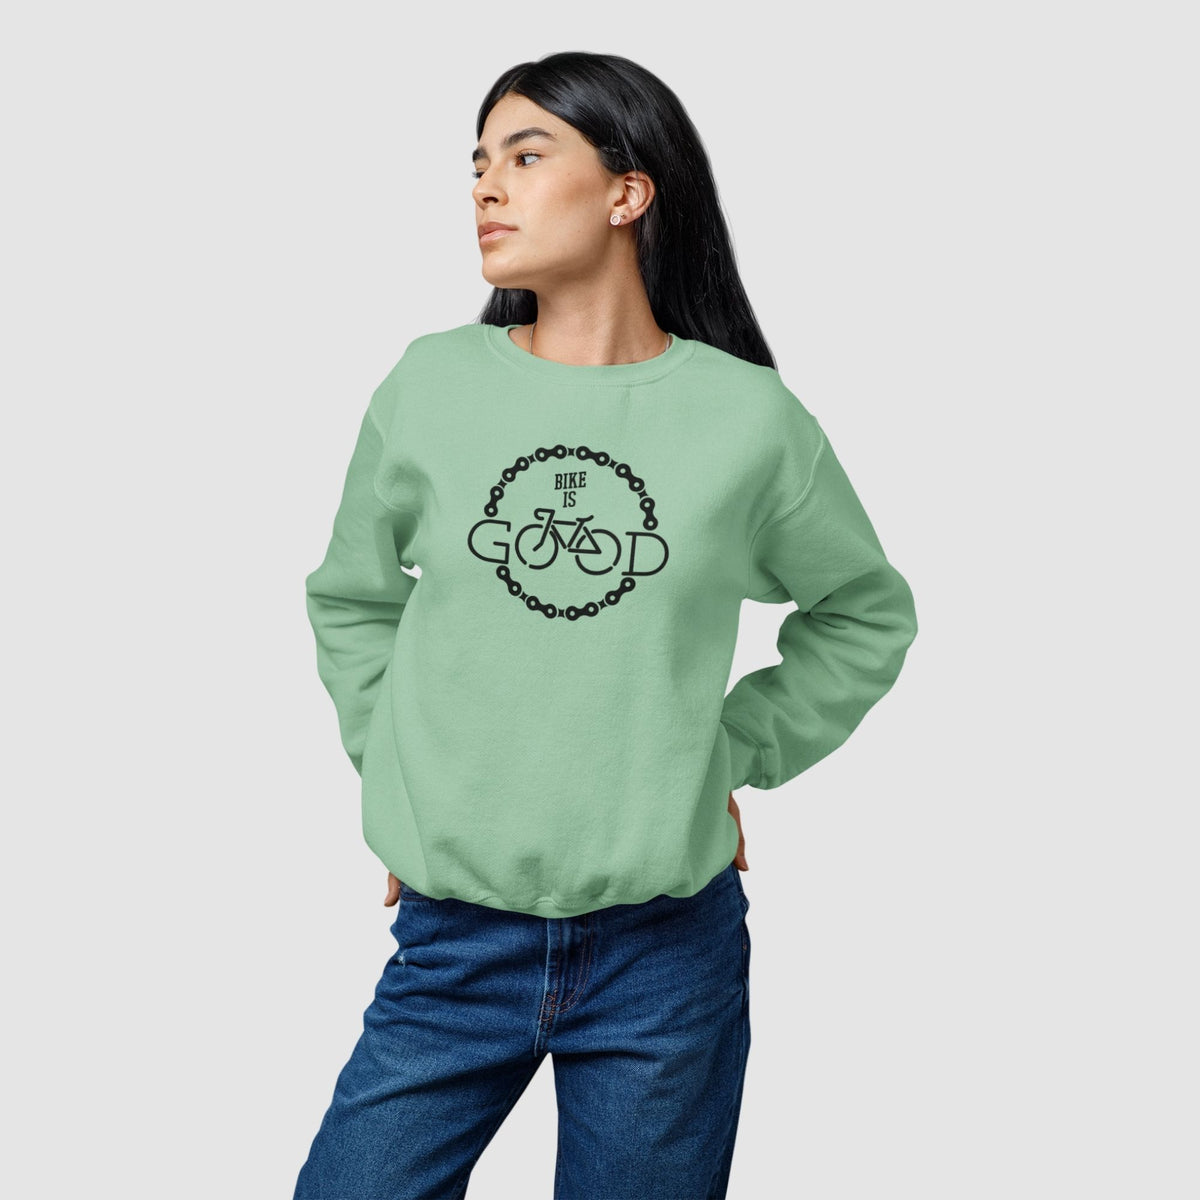 bike-is-good-cotton-printed-unisex-mint-female-model-sweatshirt-gogirgit-com